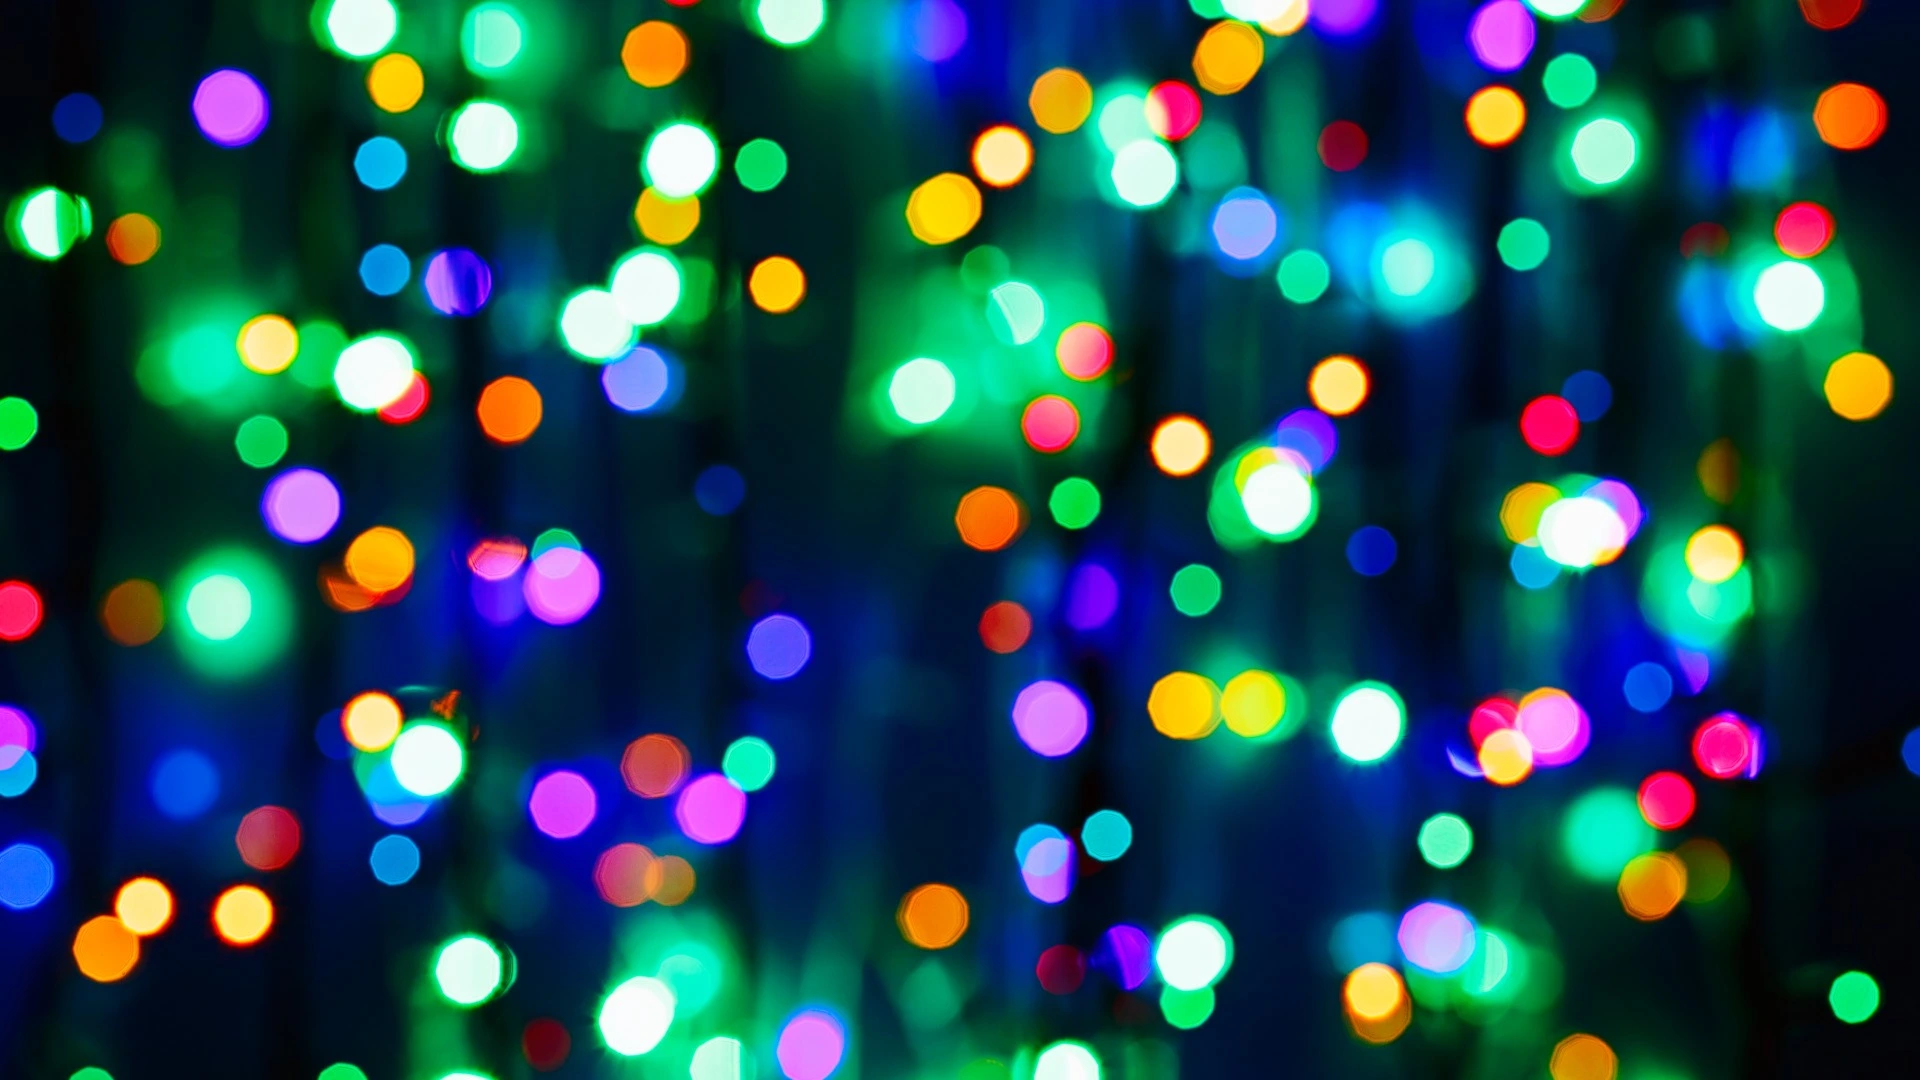 LED holiday light strings blurred in Rowlett, TX.